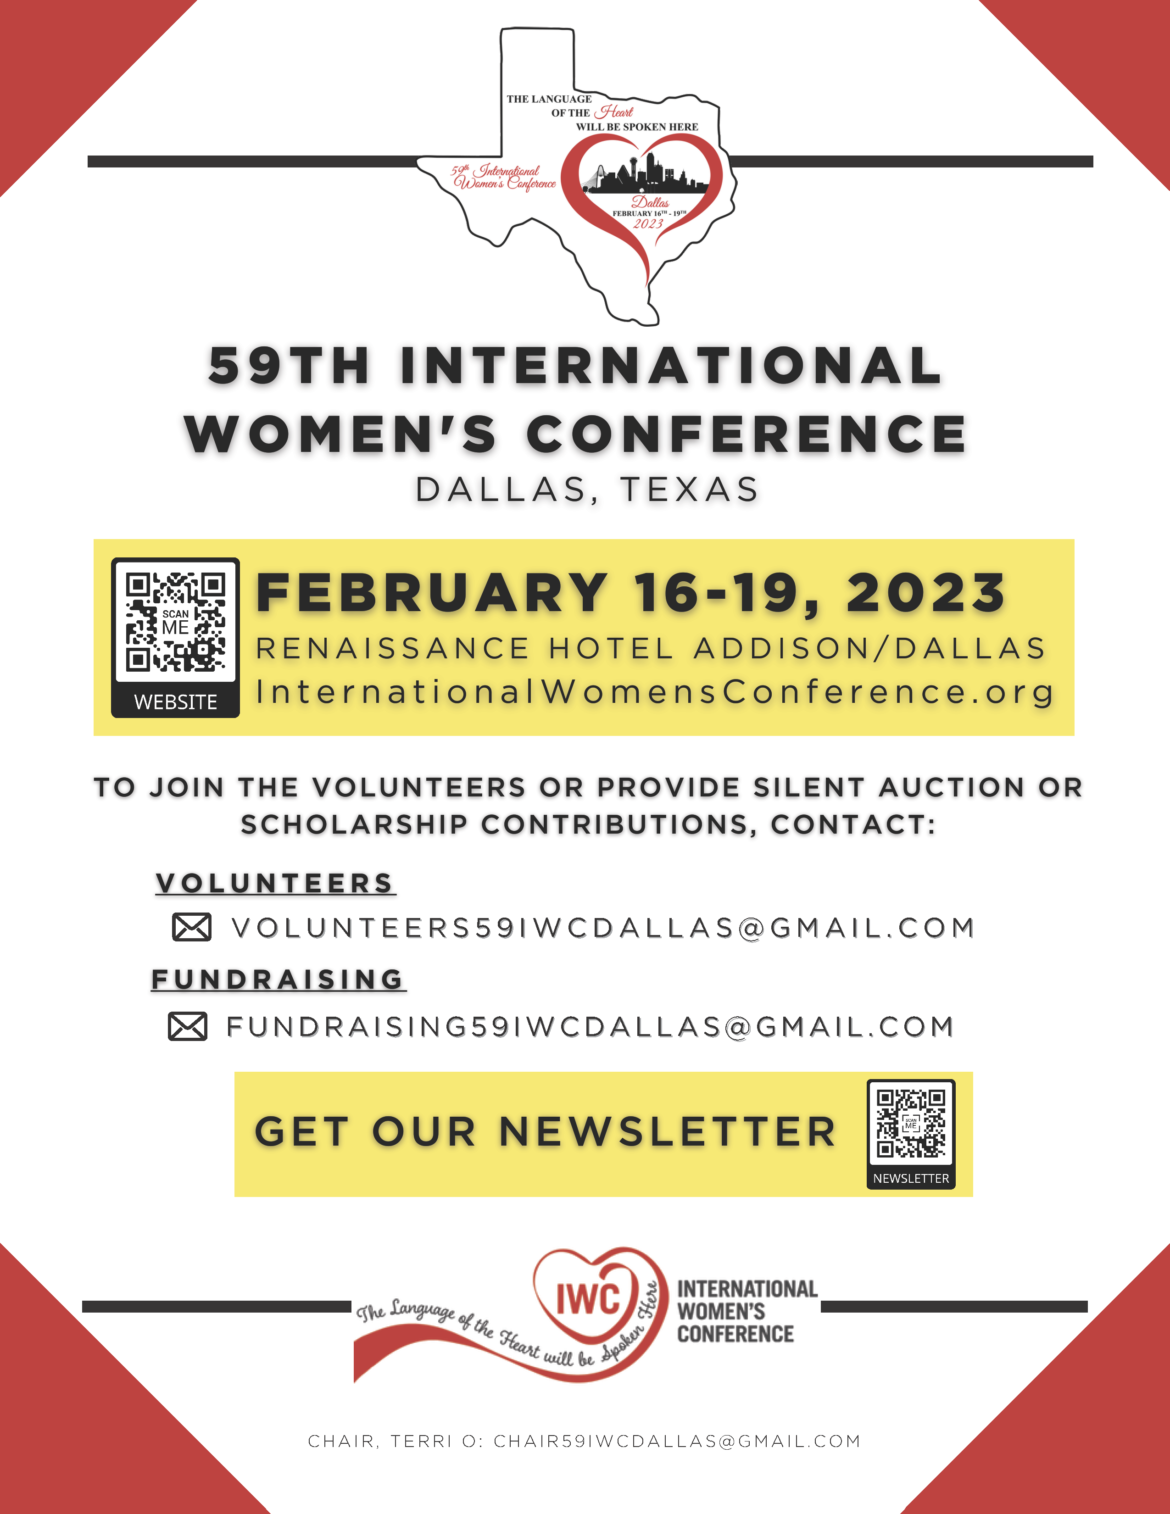 Feb. 2023: International Women’s Conference